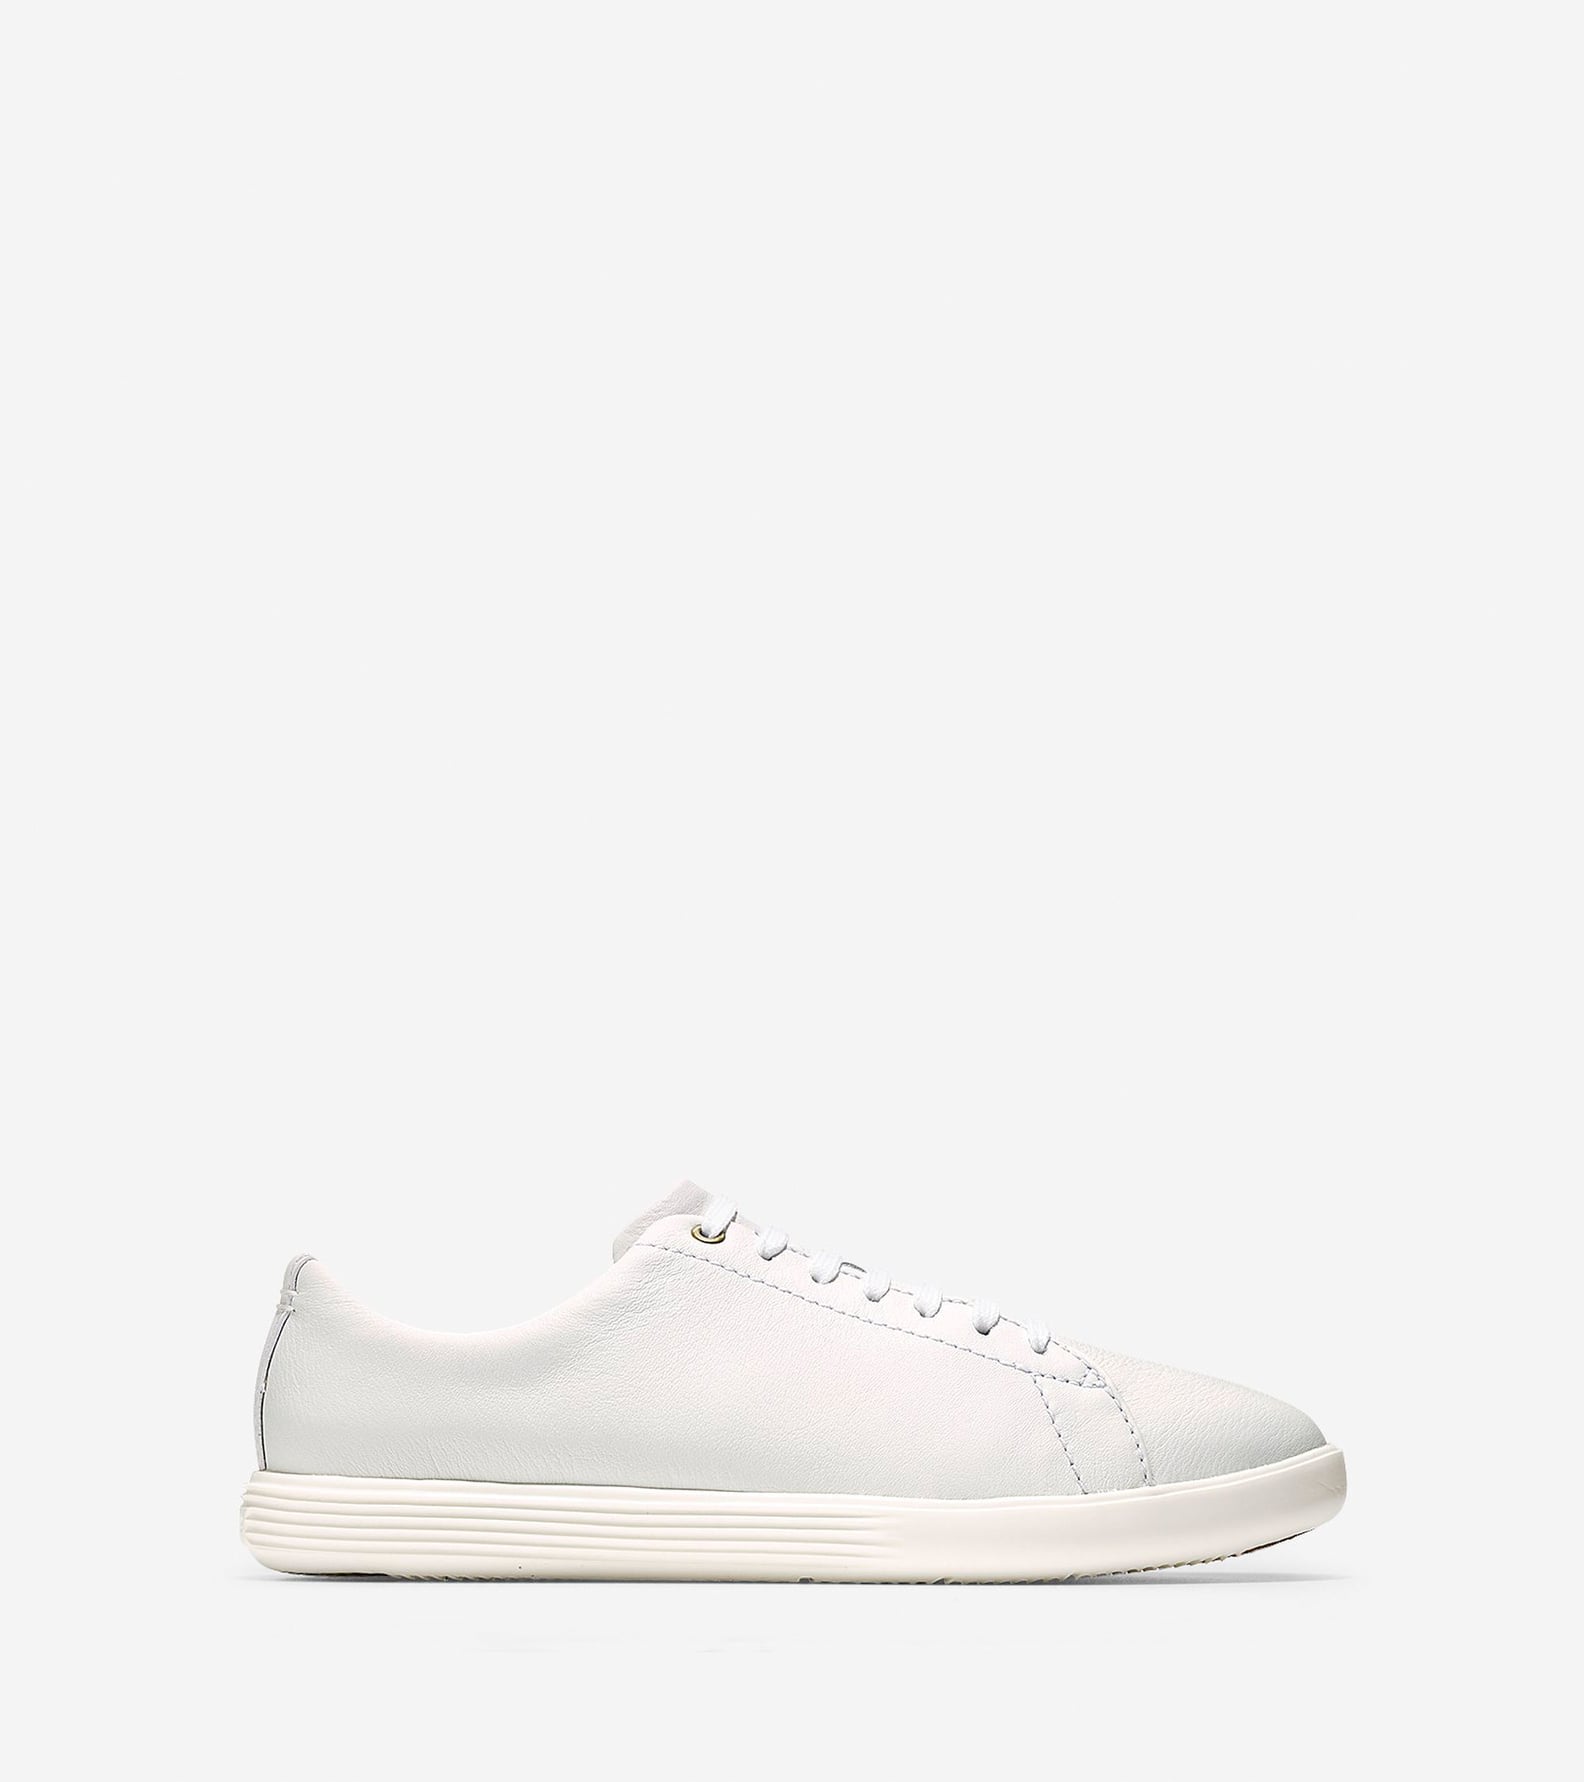 Jennifer Aniston's White Sneakers | POPSUGAR Fashion